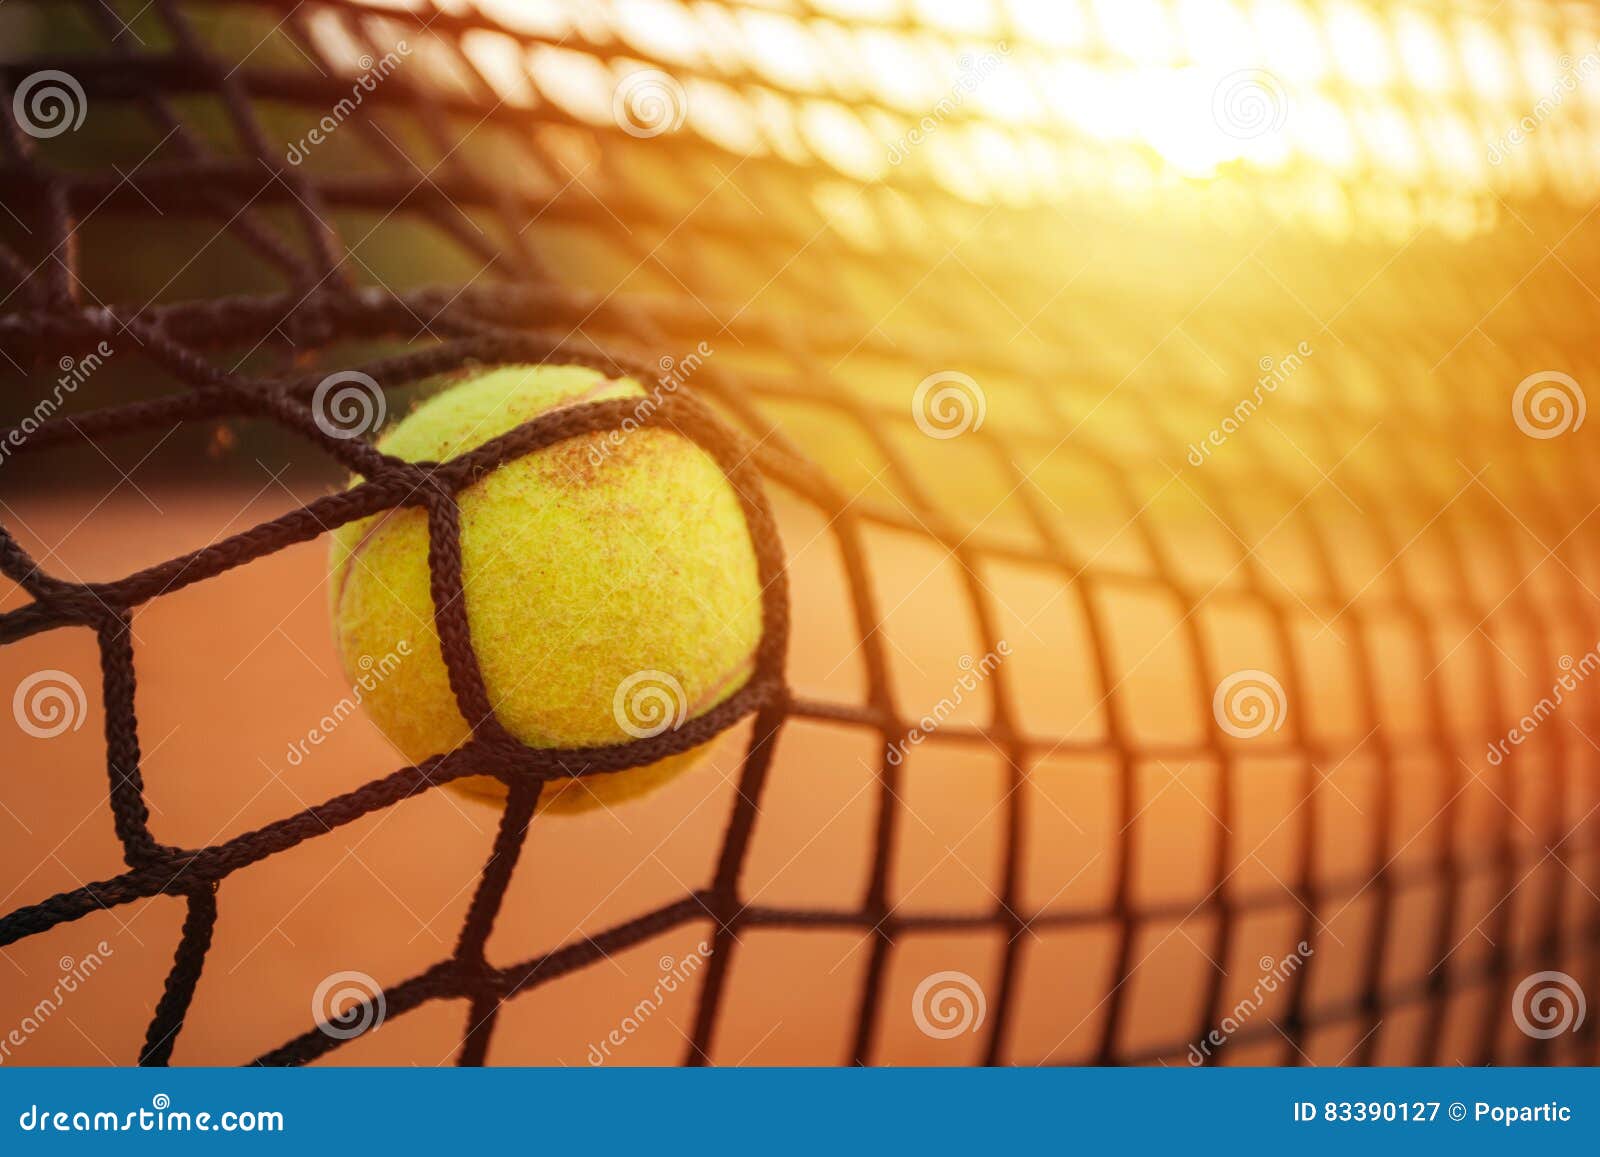 tennis ball in the tennis net